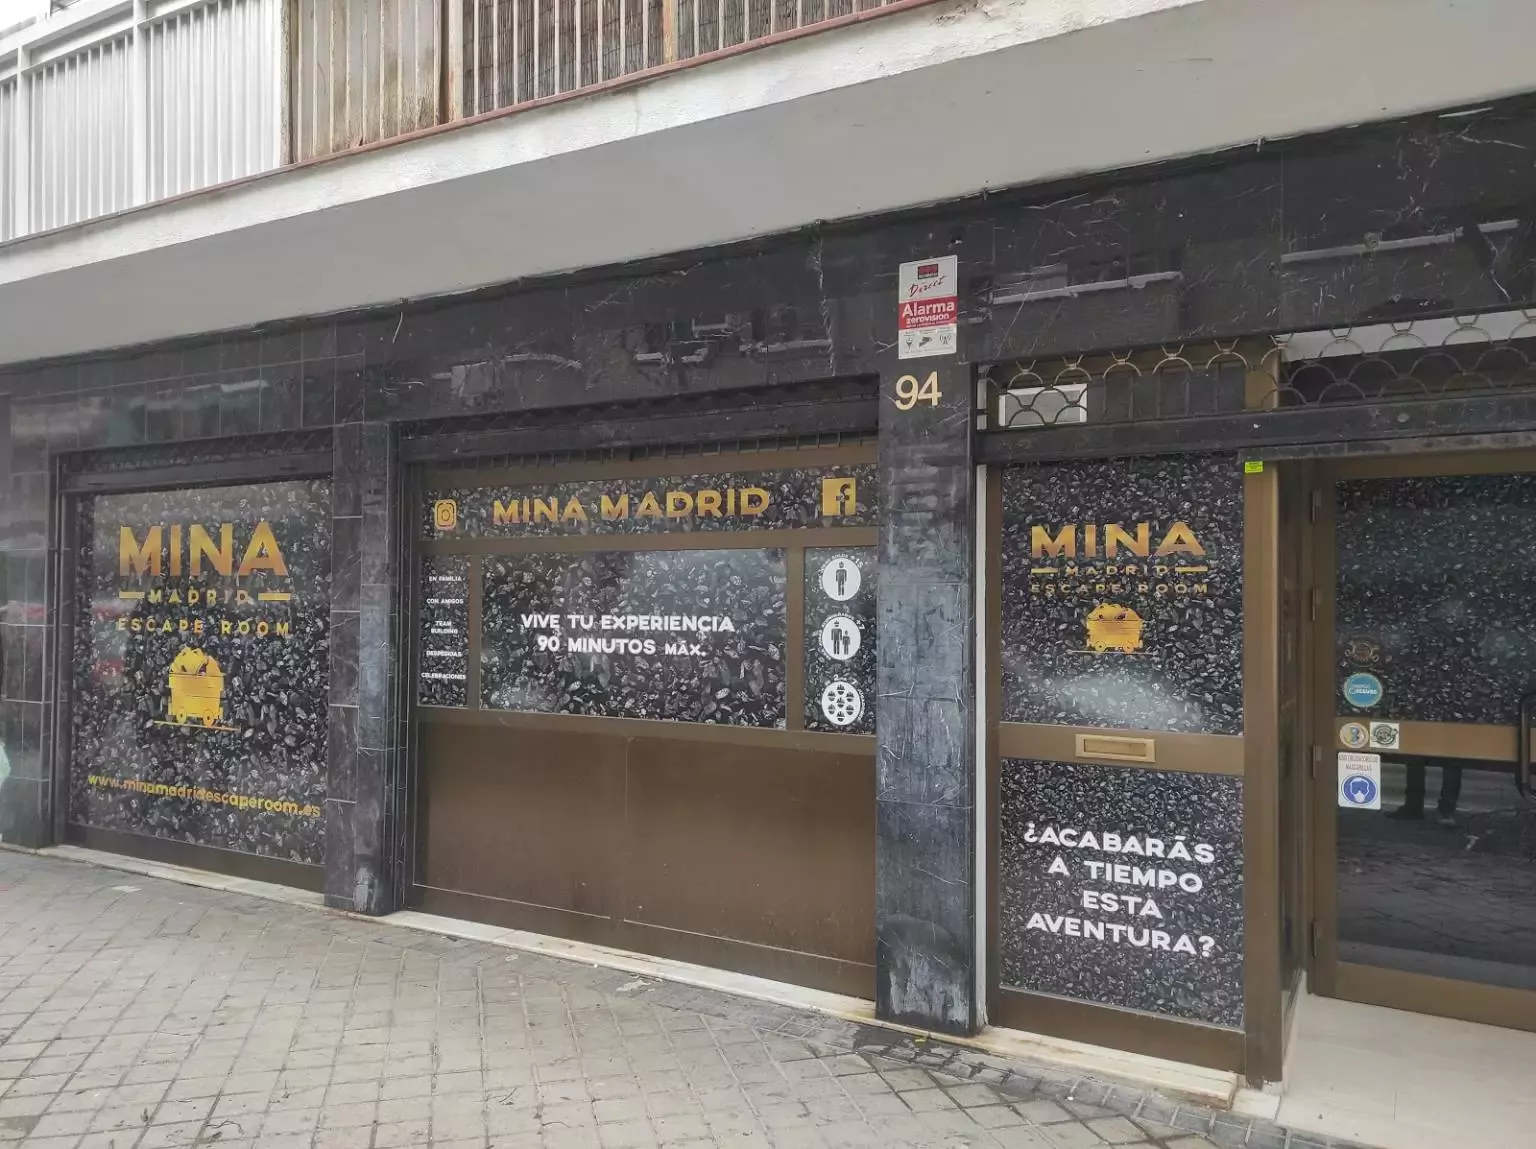 2. Mina Madrid  - Hidden Escape Room